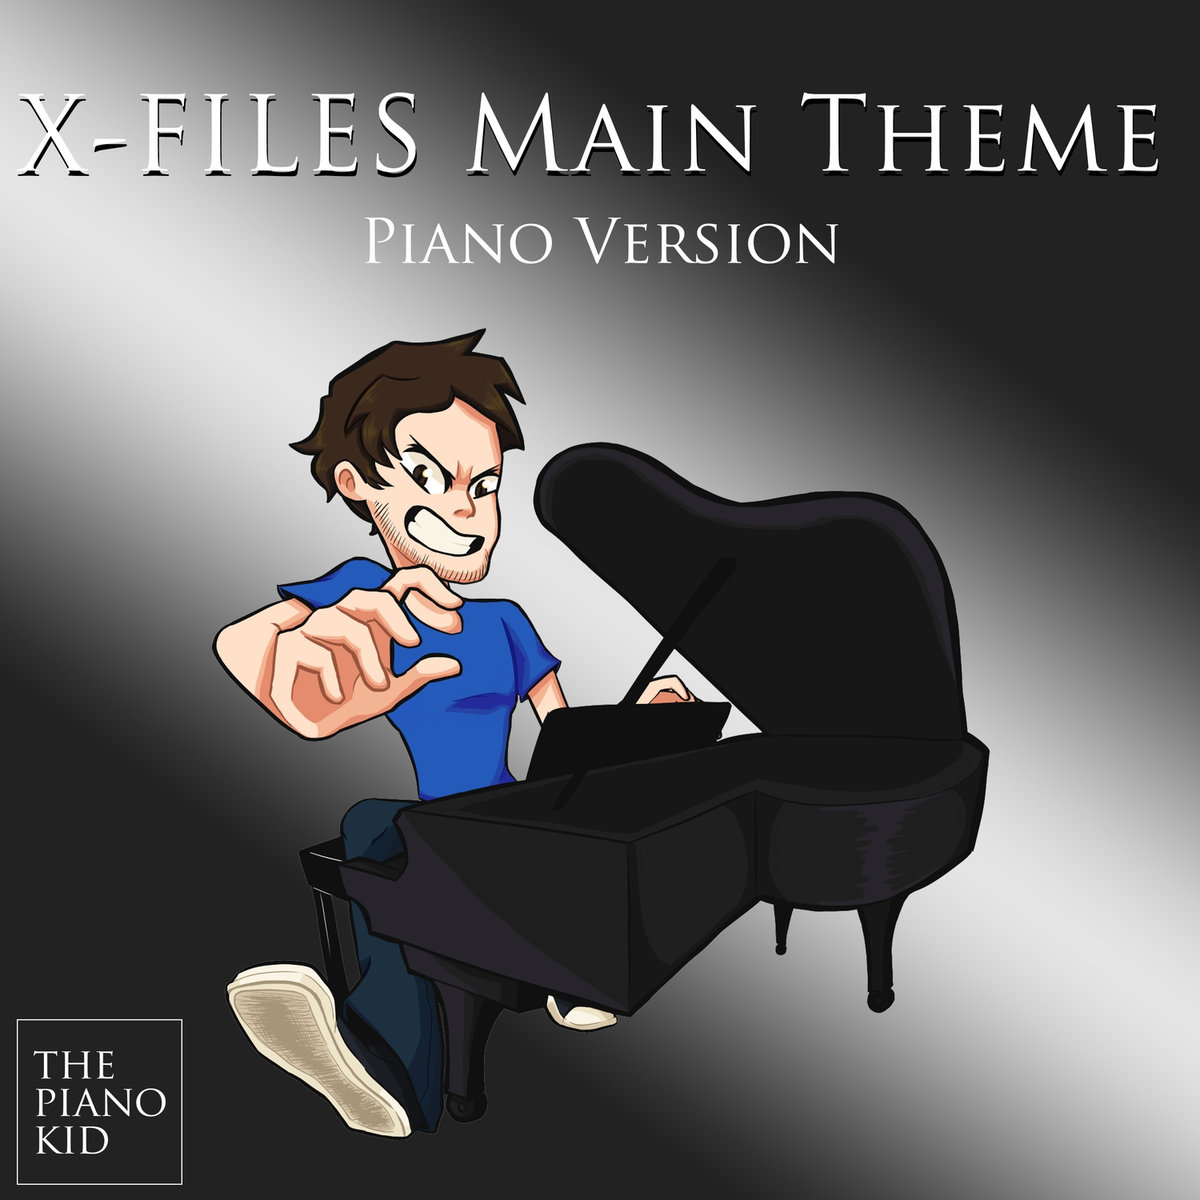 The x files Theme Piano. Piano Version. Секретные материалы музыка. Tenet - main Theme (Piano Version). New main files